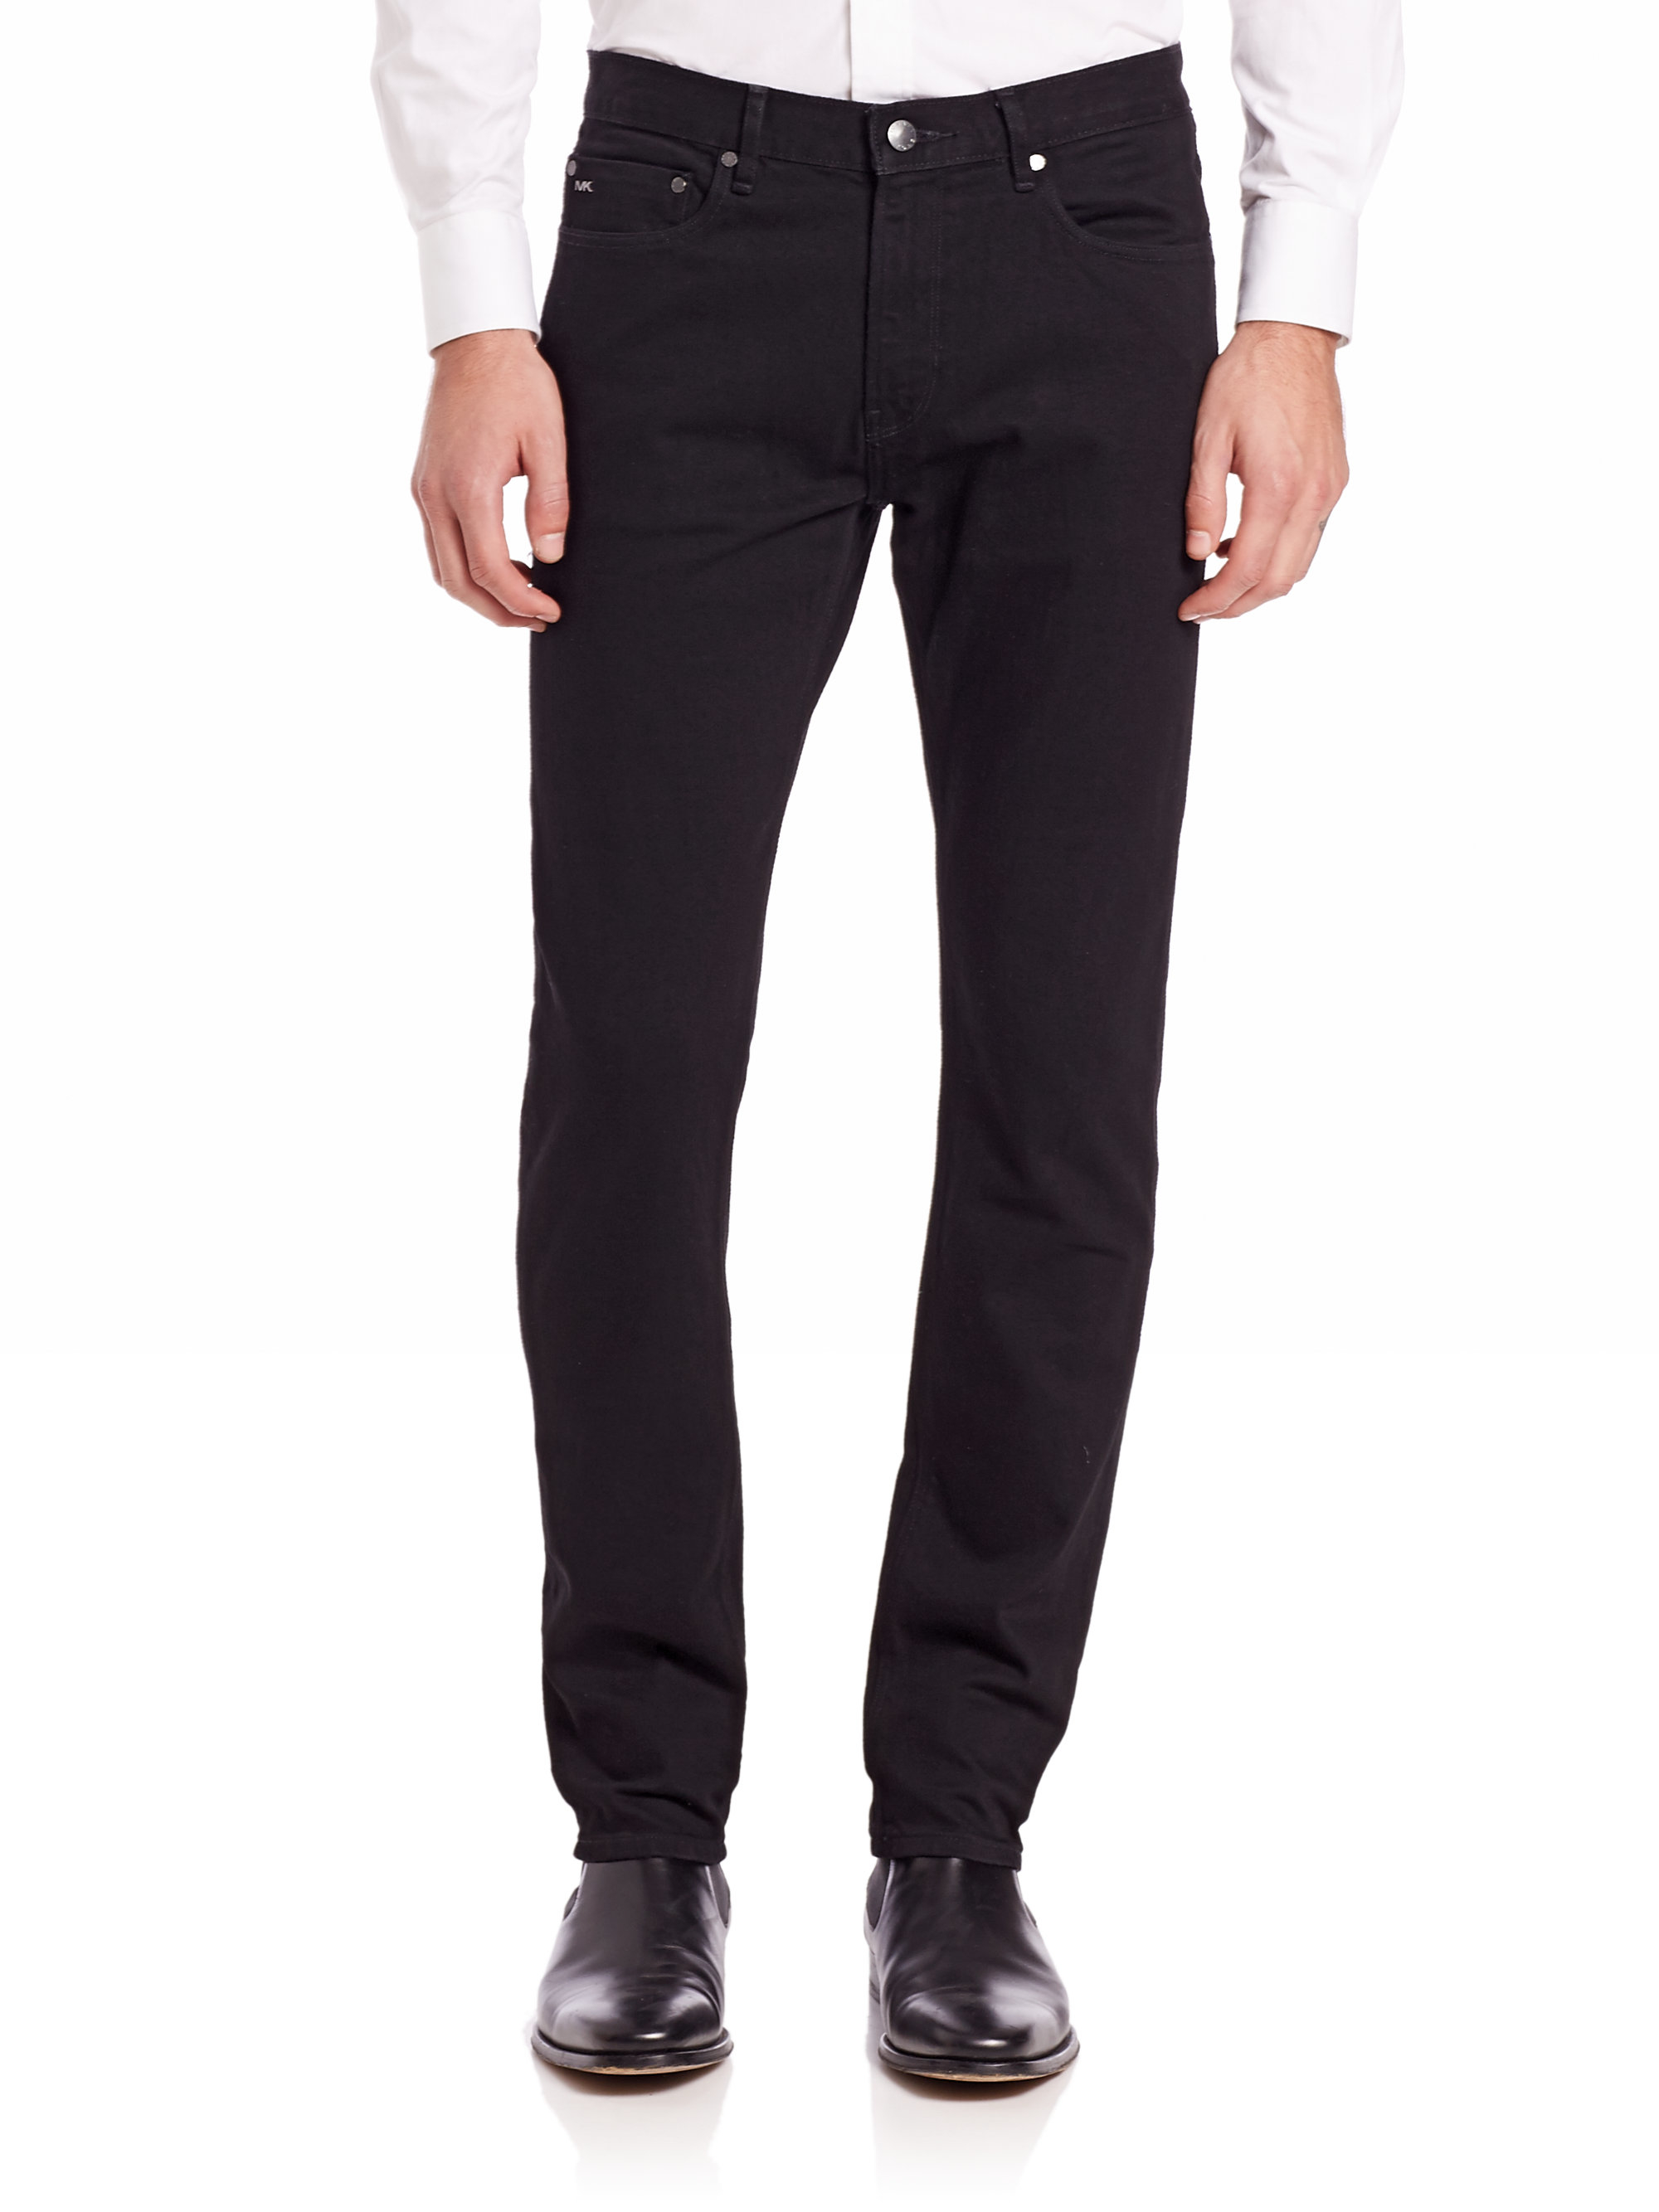 Michael kors Slim-fit Jeans in Black for Men | Lyst